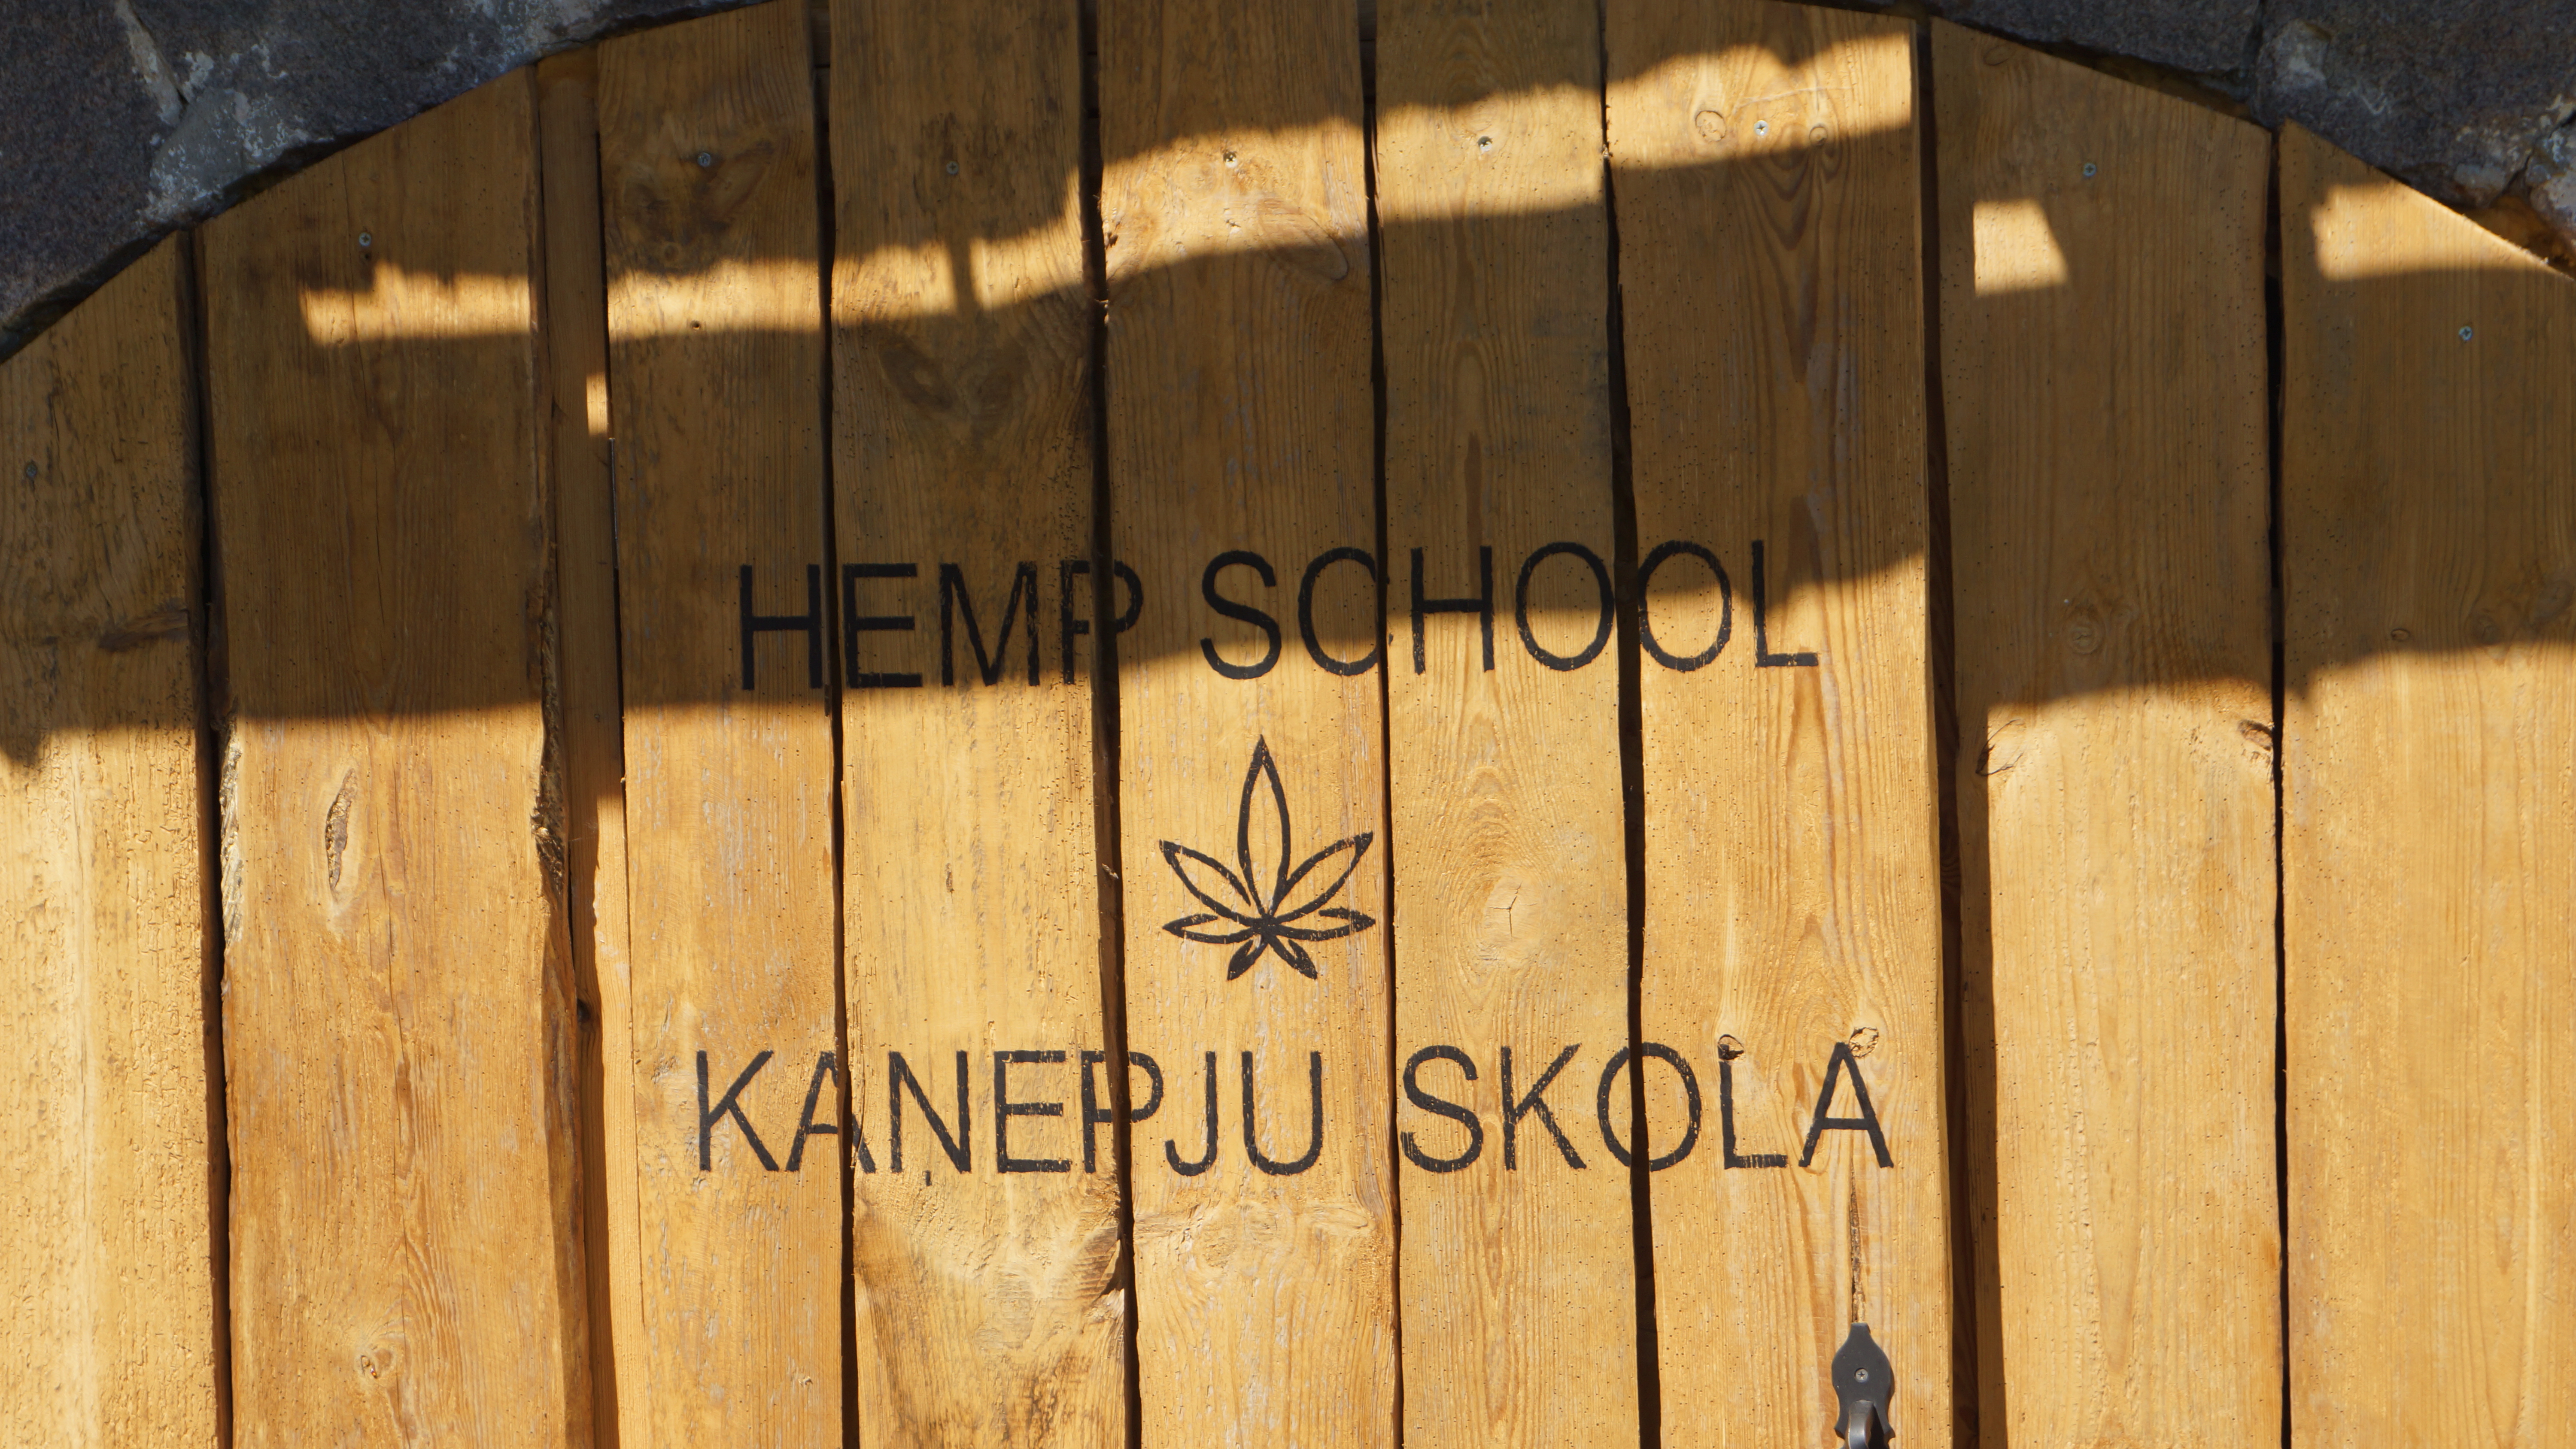 The entry of the hemp school.